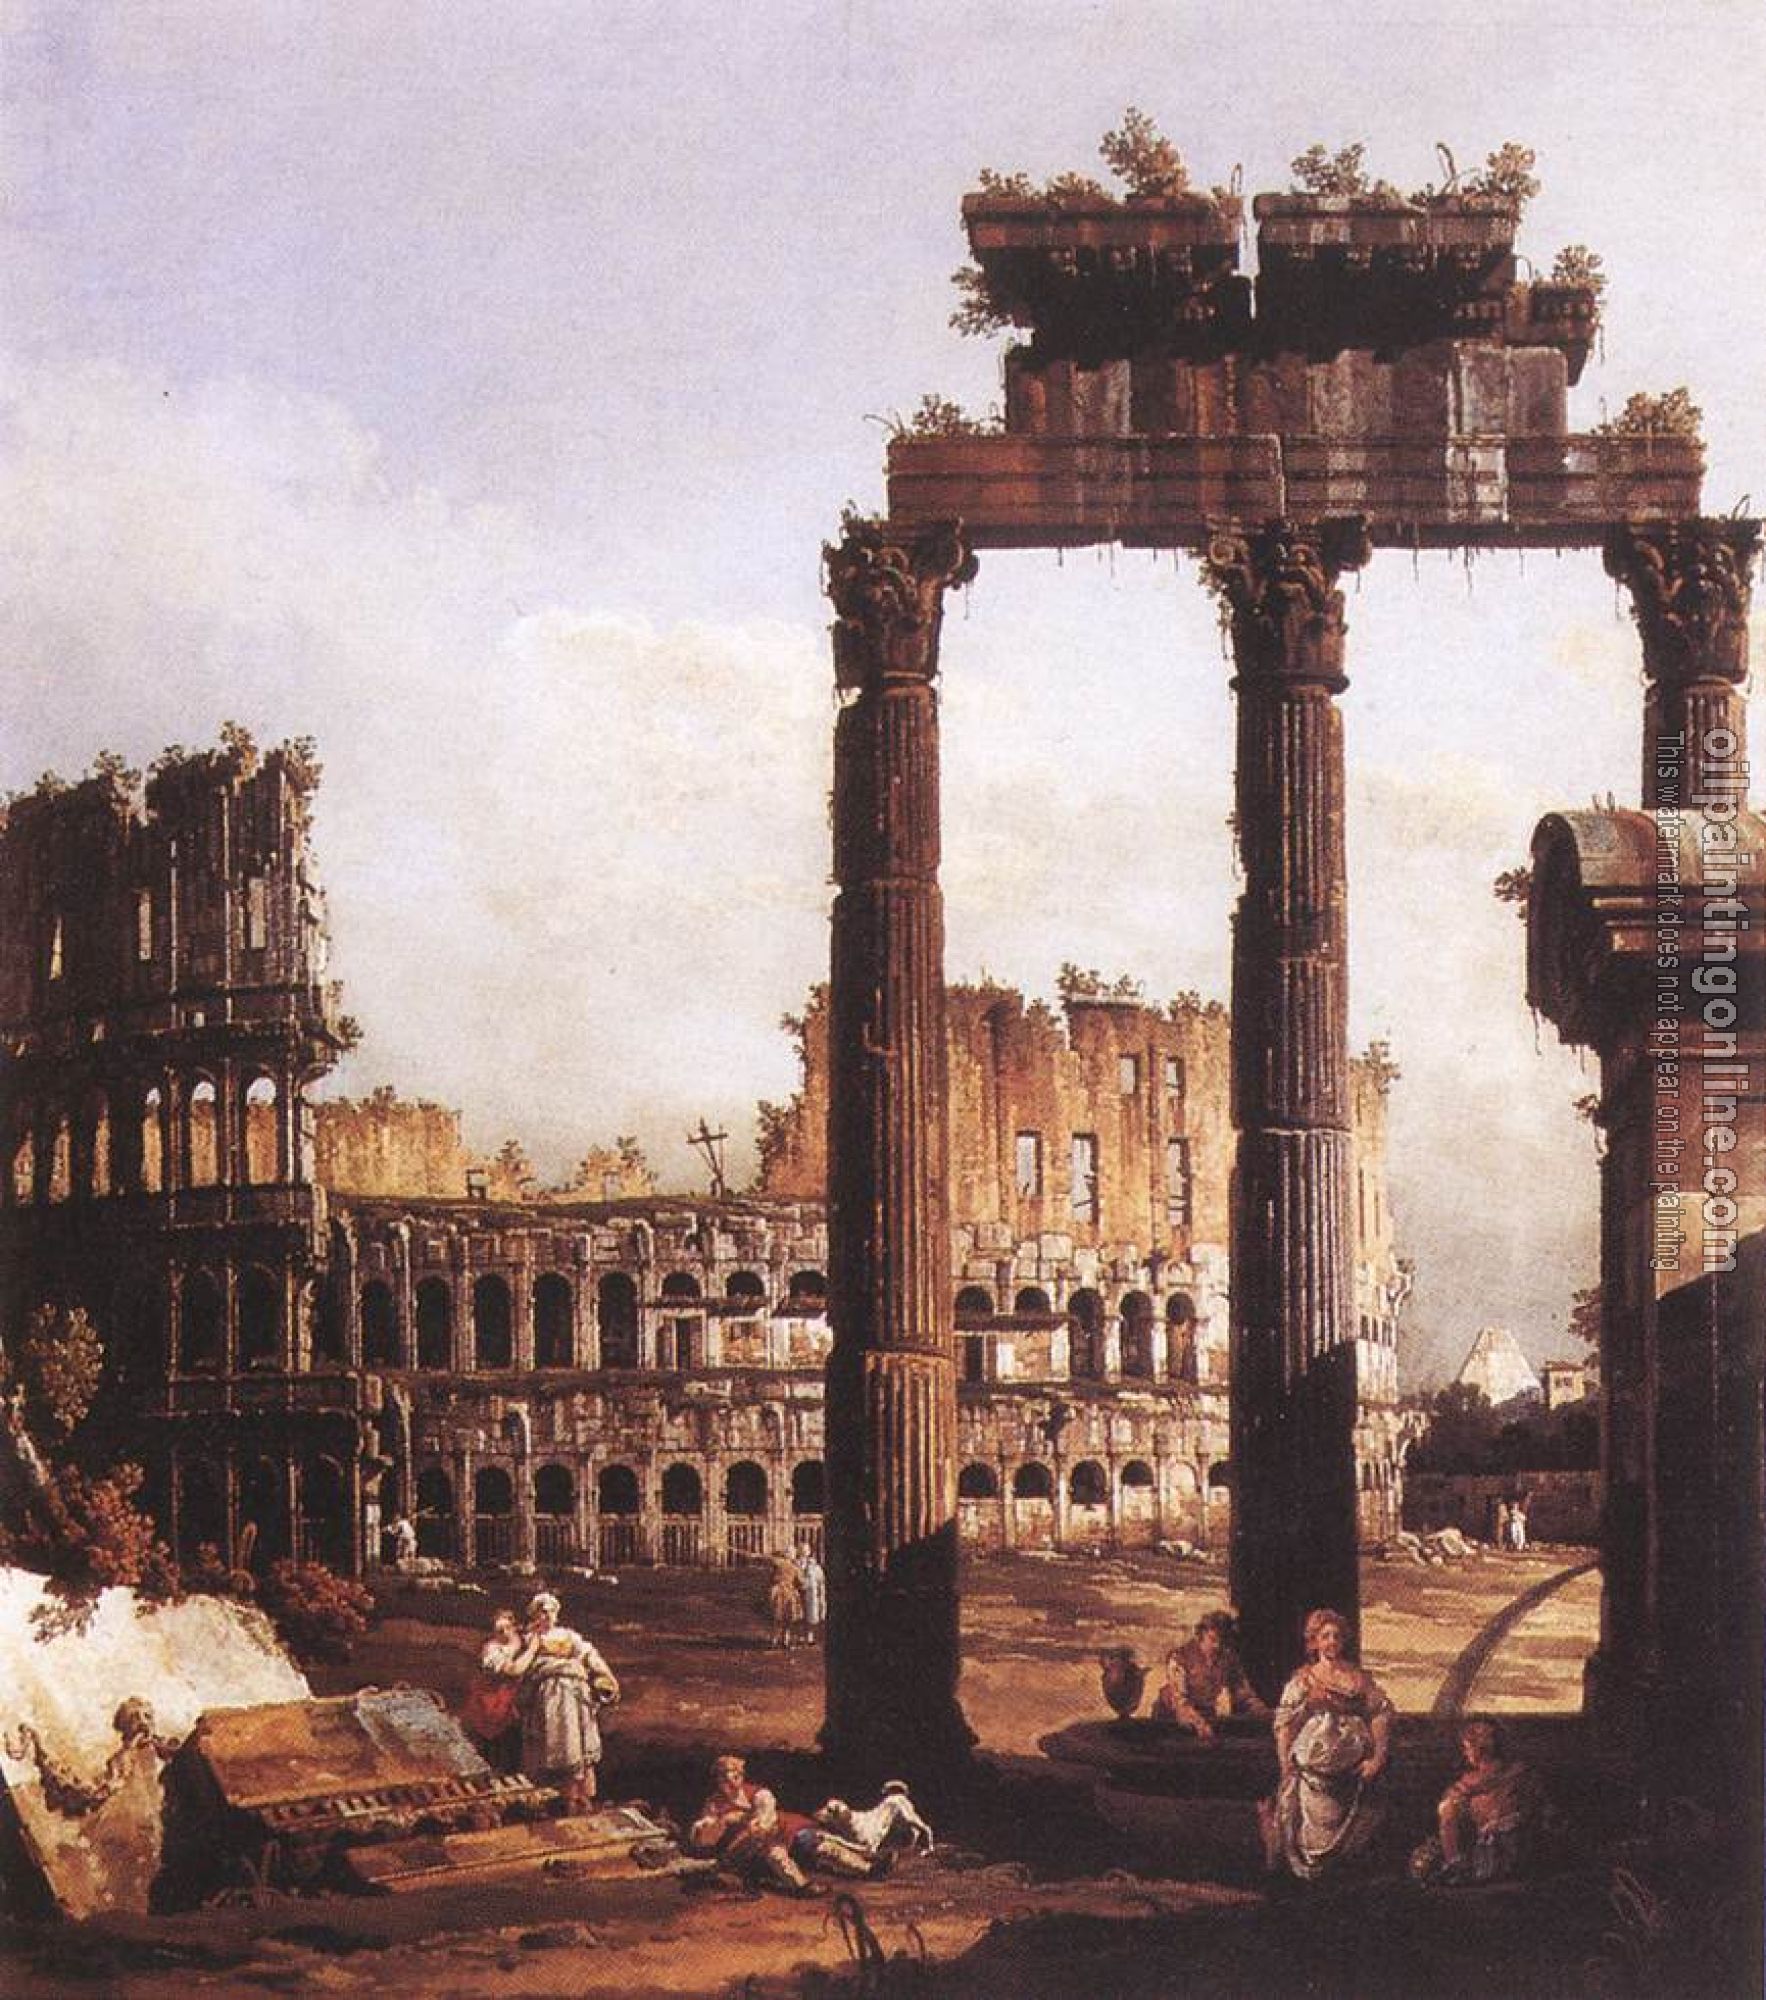 Bellotto, Bernardo - Capriccio with the Colosseum